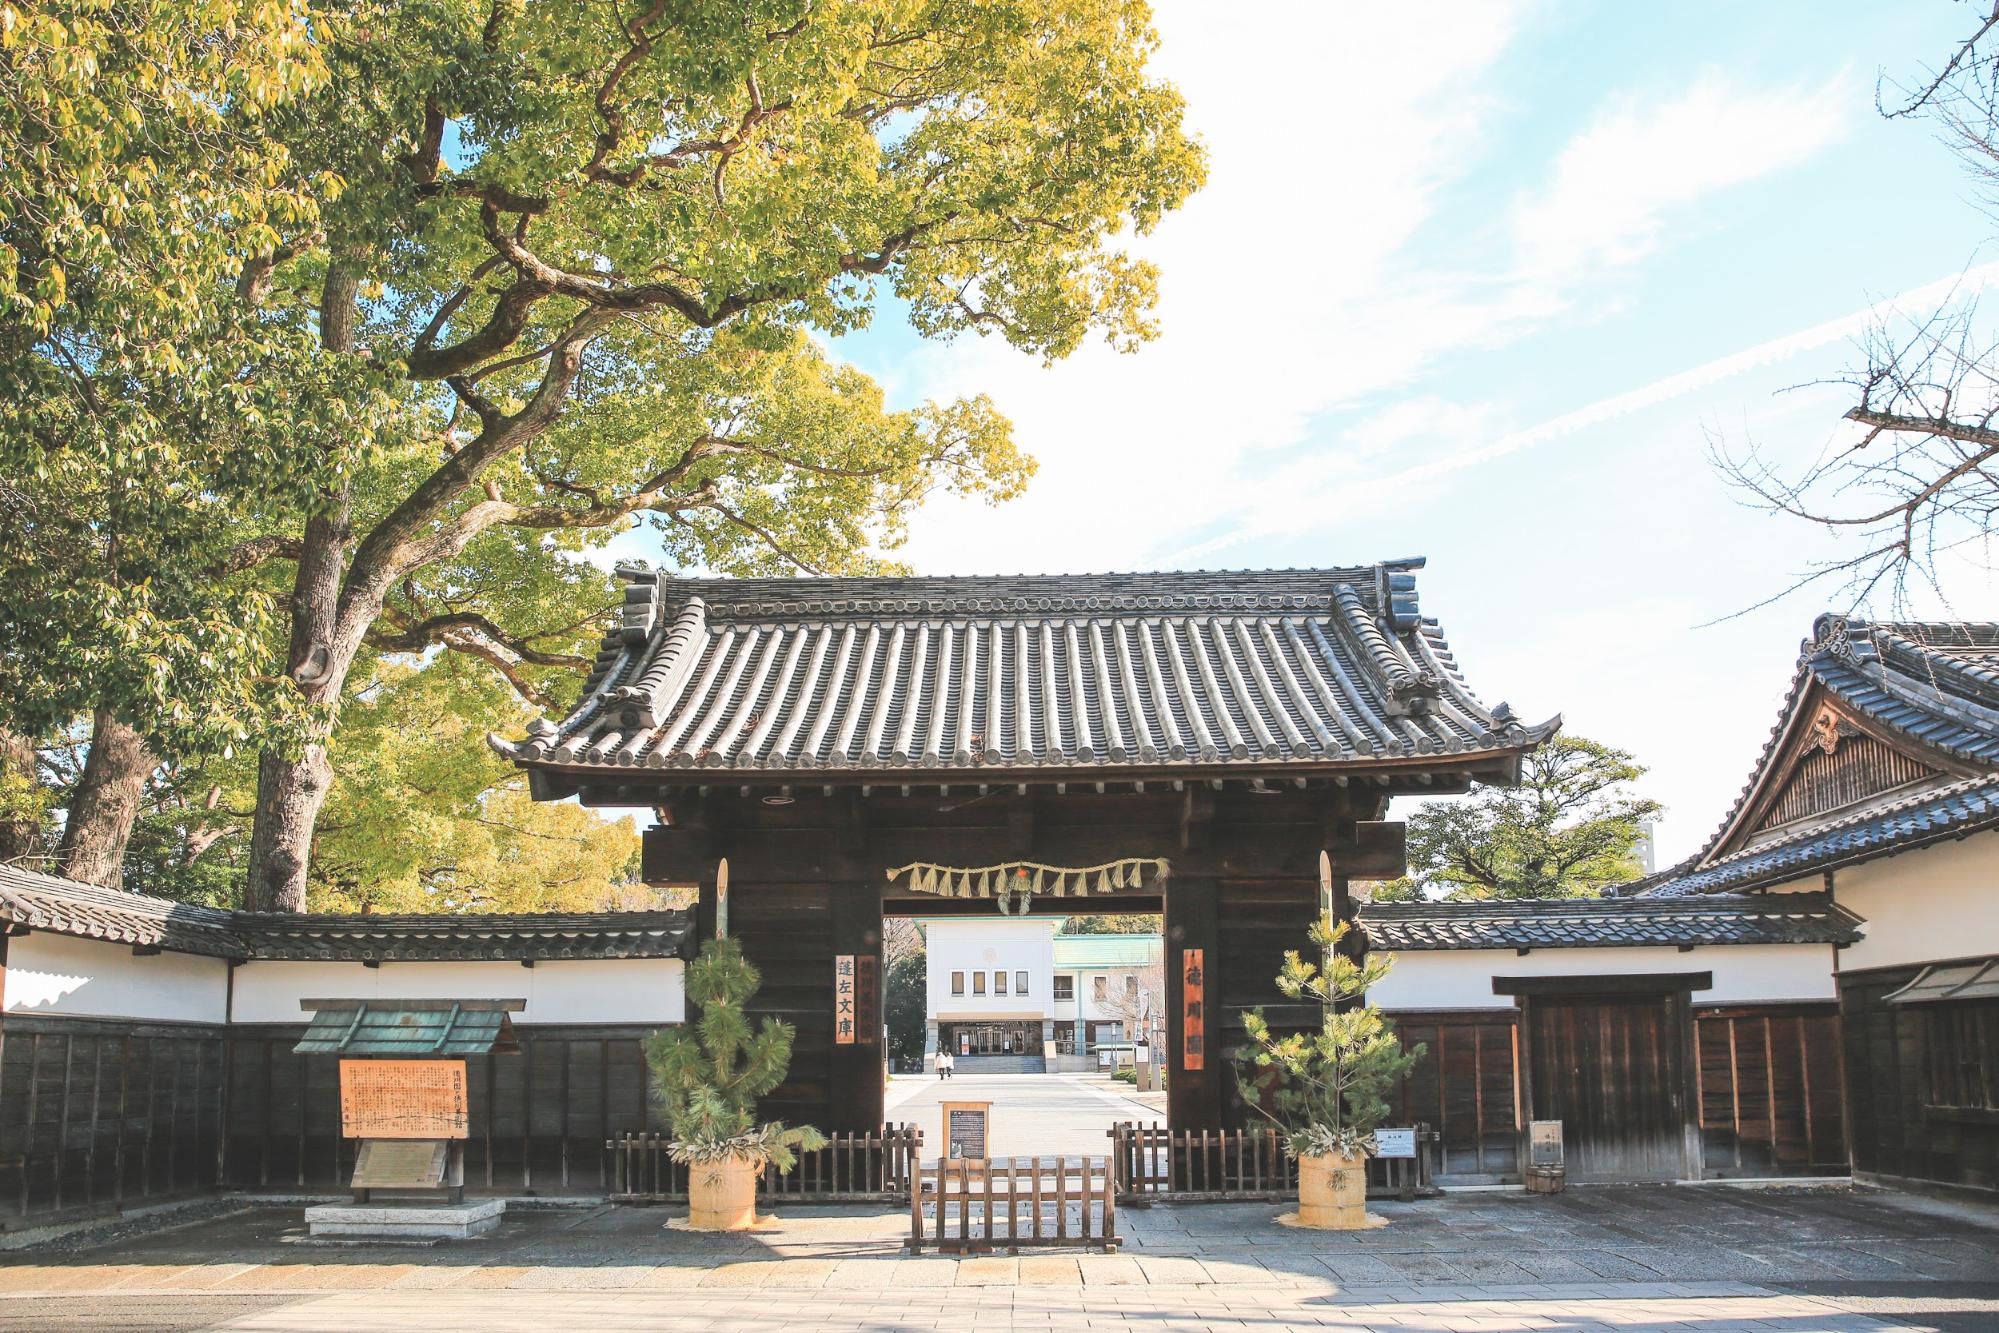 Tokugawaen, Nagoya: A Beautiful Seasonal Garden with Remnants of the Feudal Lords of Owari